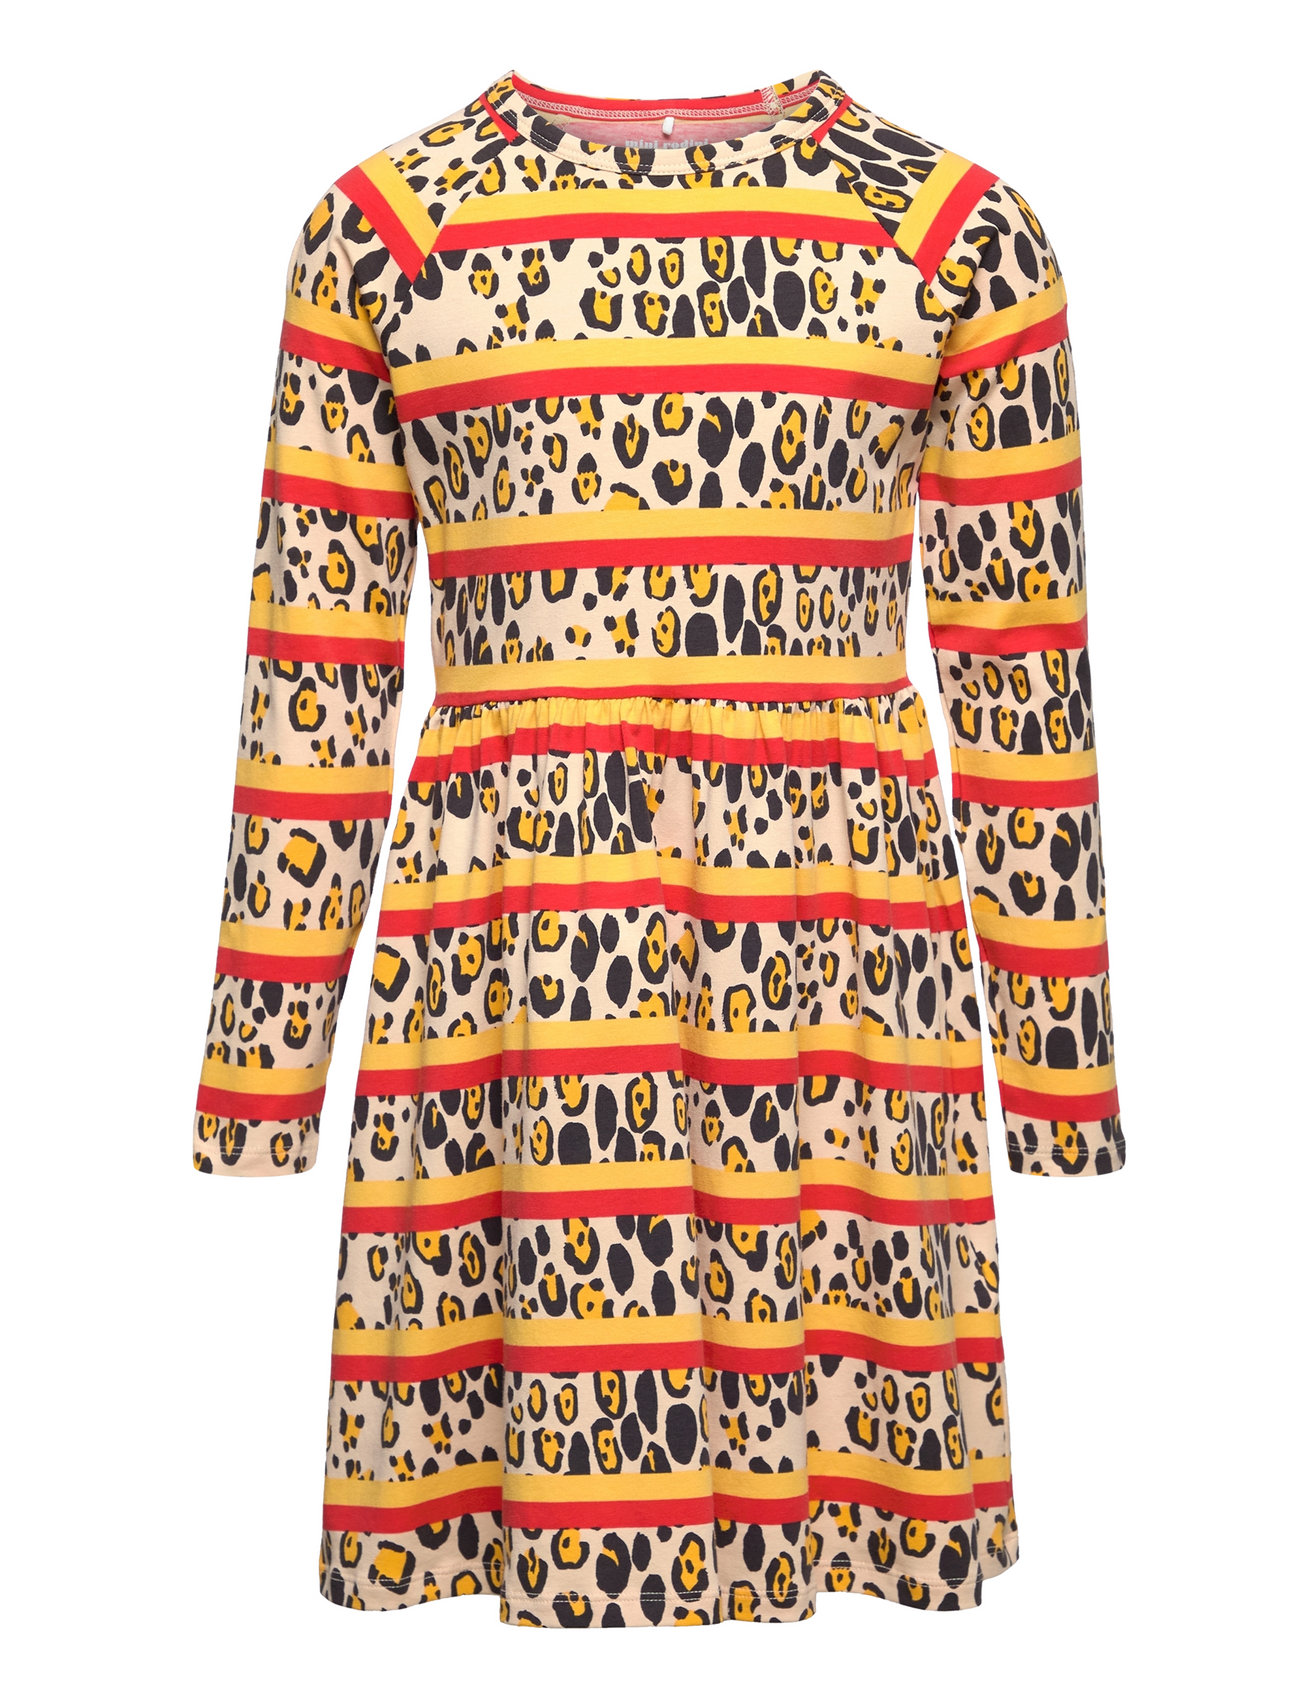 Leopard Stripe Aop Ls Dress Dresses & Skirts Dresses Casual Dresses Long-sleeved Casual Dresses Multi/patterned Mini Rodini